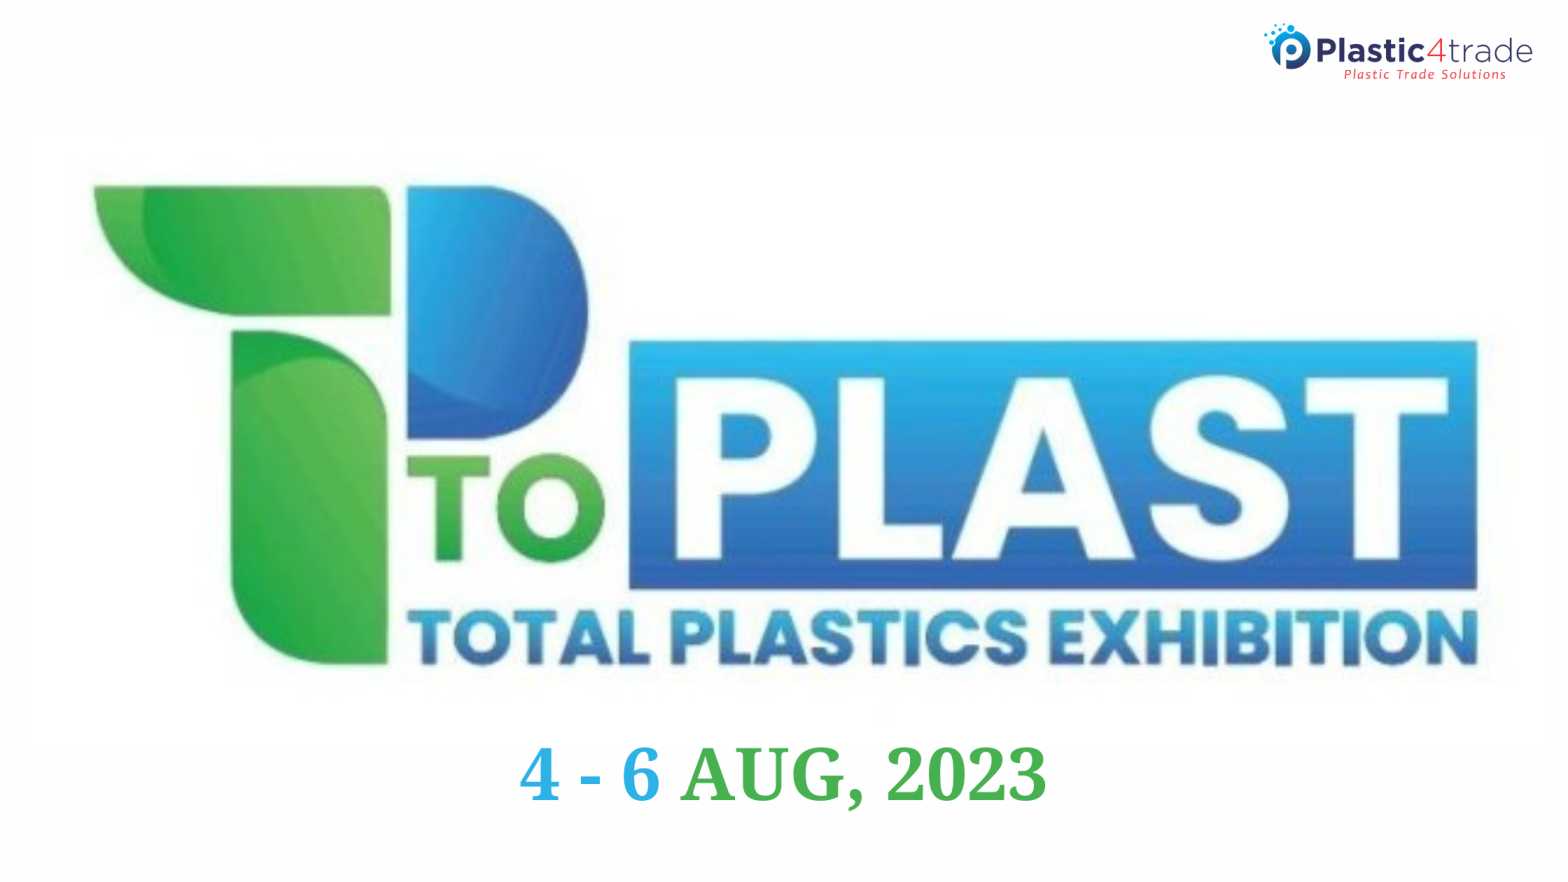 TOPLAST - Total Plastics Exhibition 2023 Plastic4trade